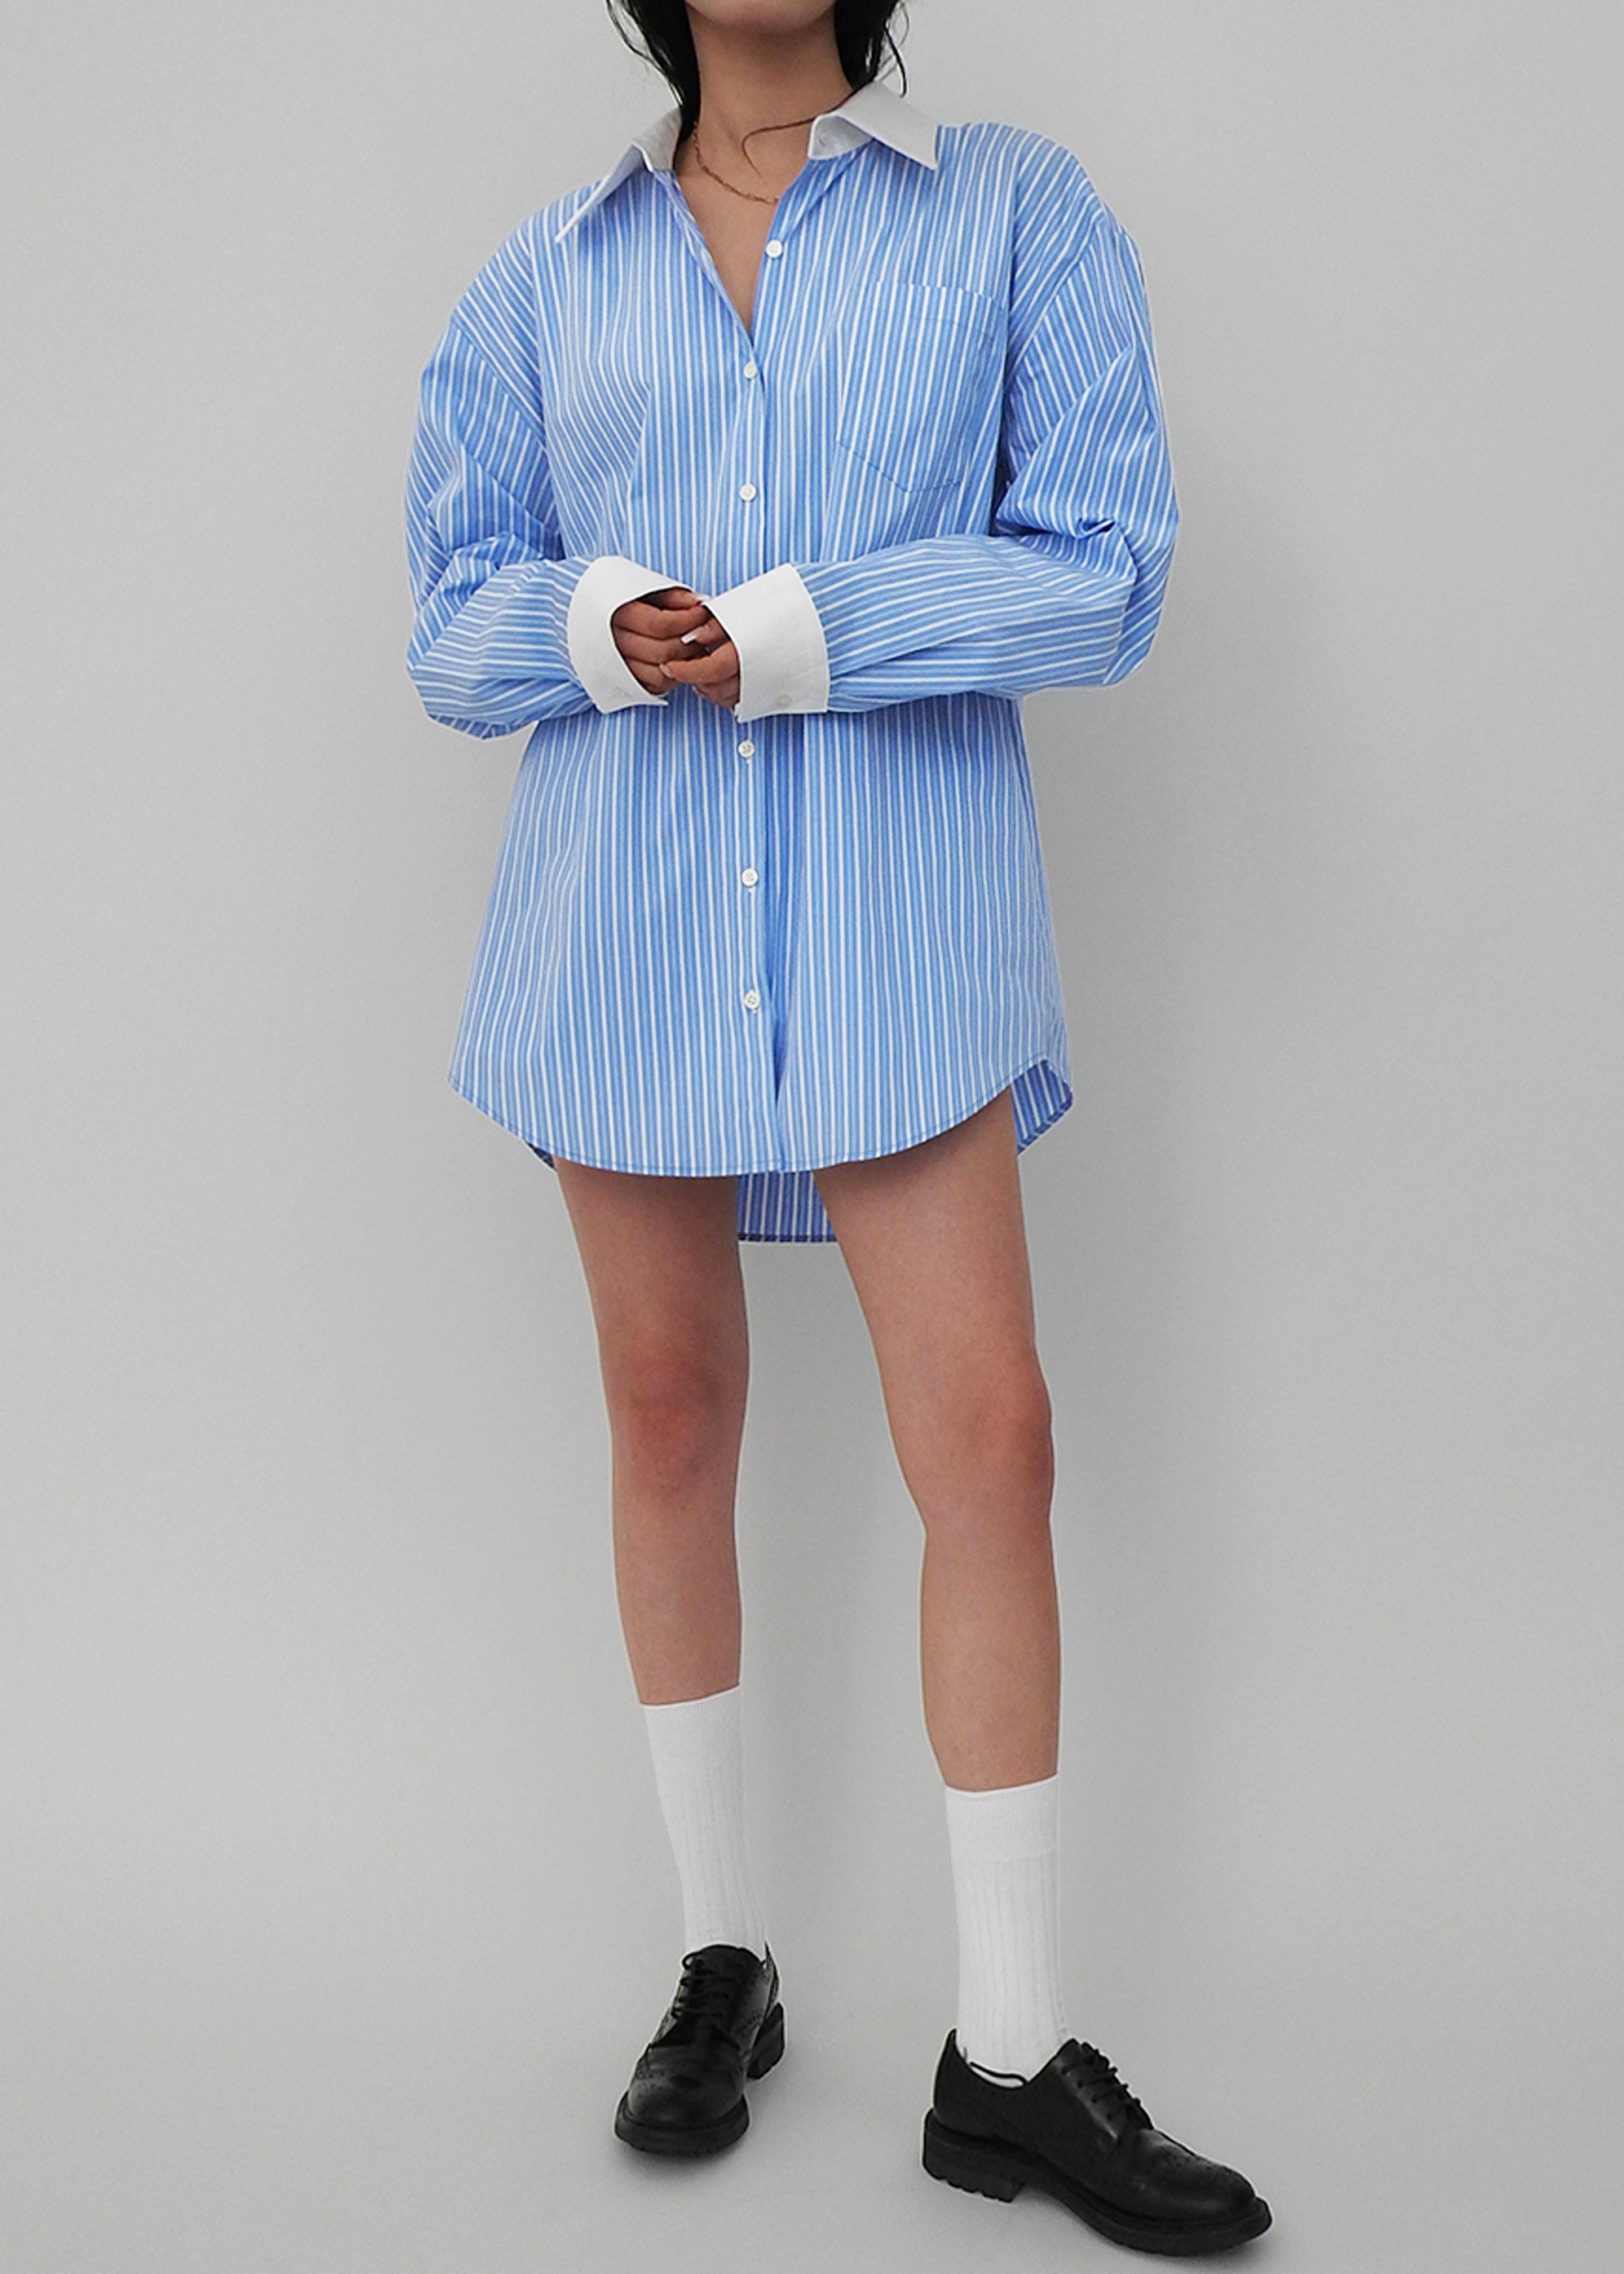 Orla Button Up Shirt - Blue/White Stripe - 2